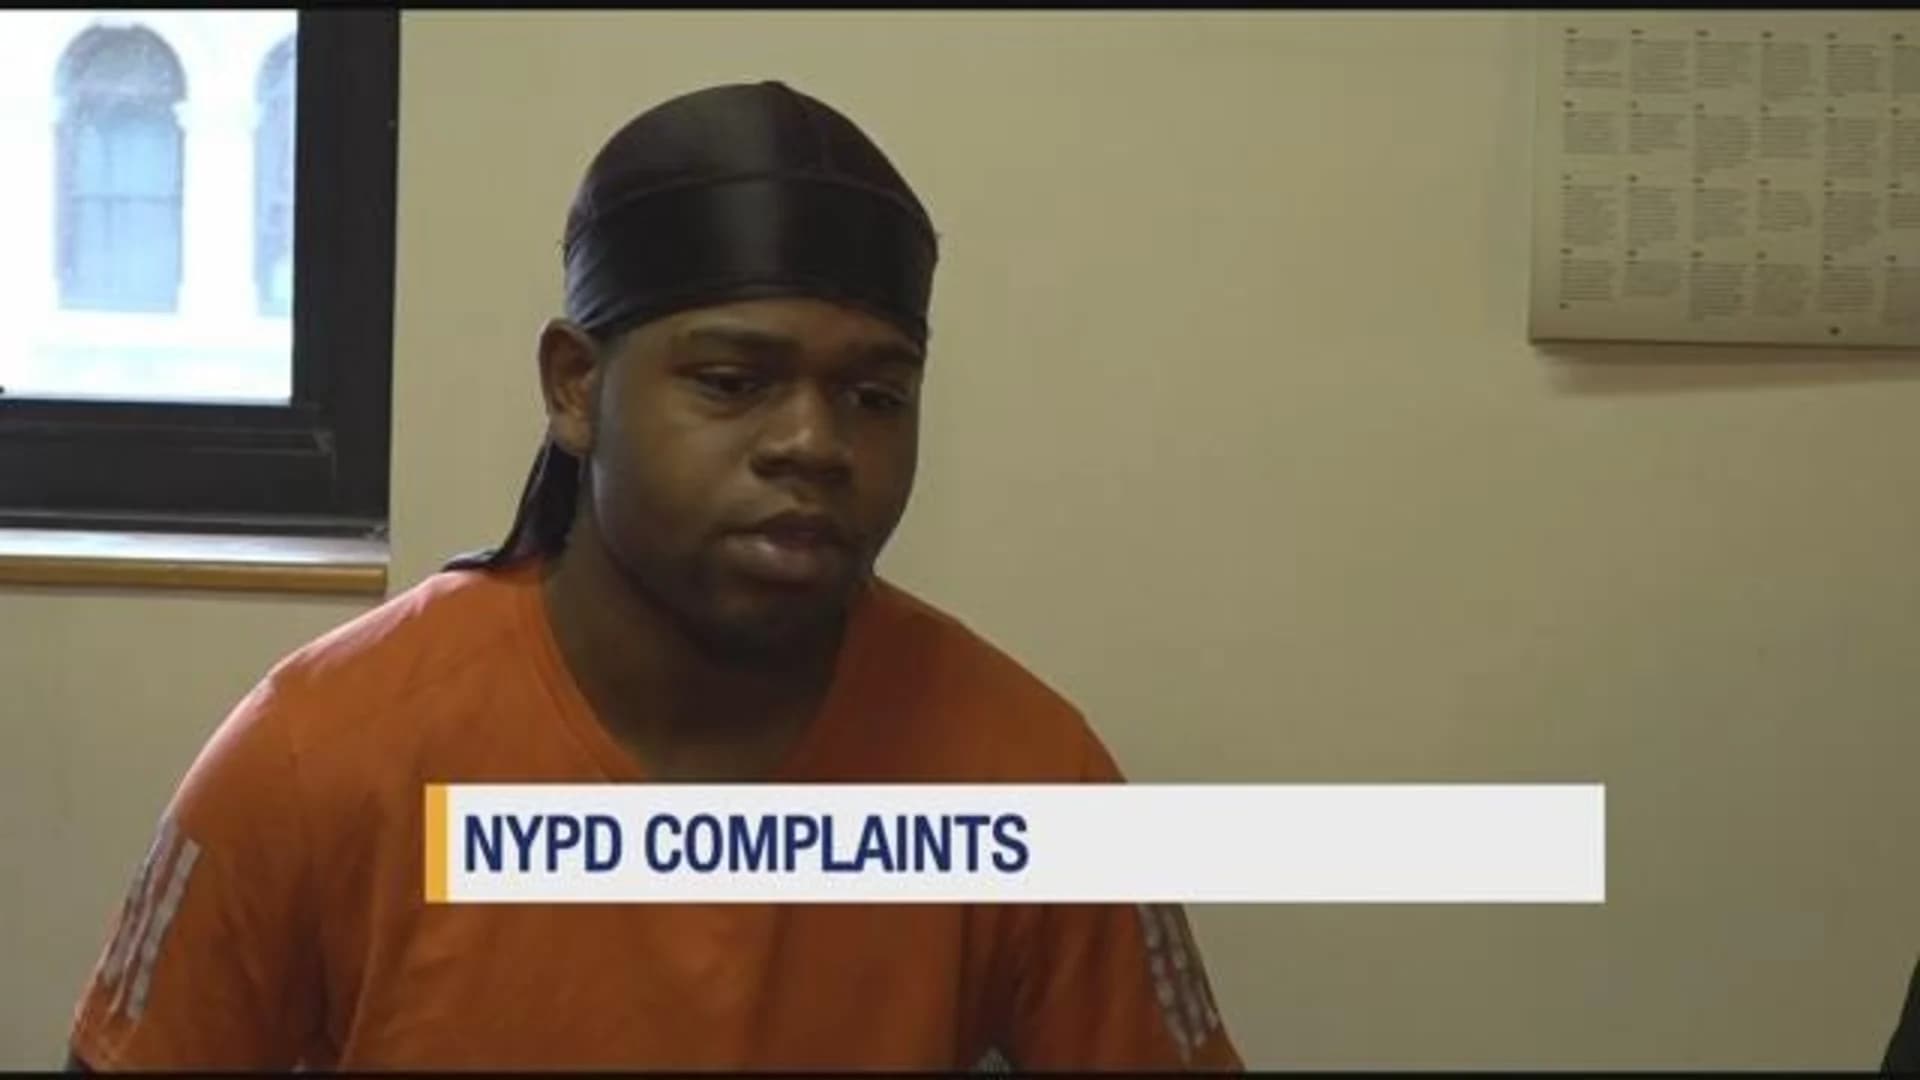 Teen, public defenders accuse NYPD of wrongful violent arrest